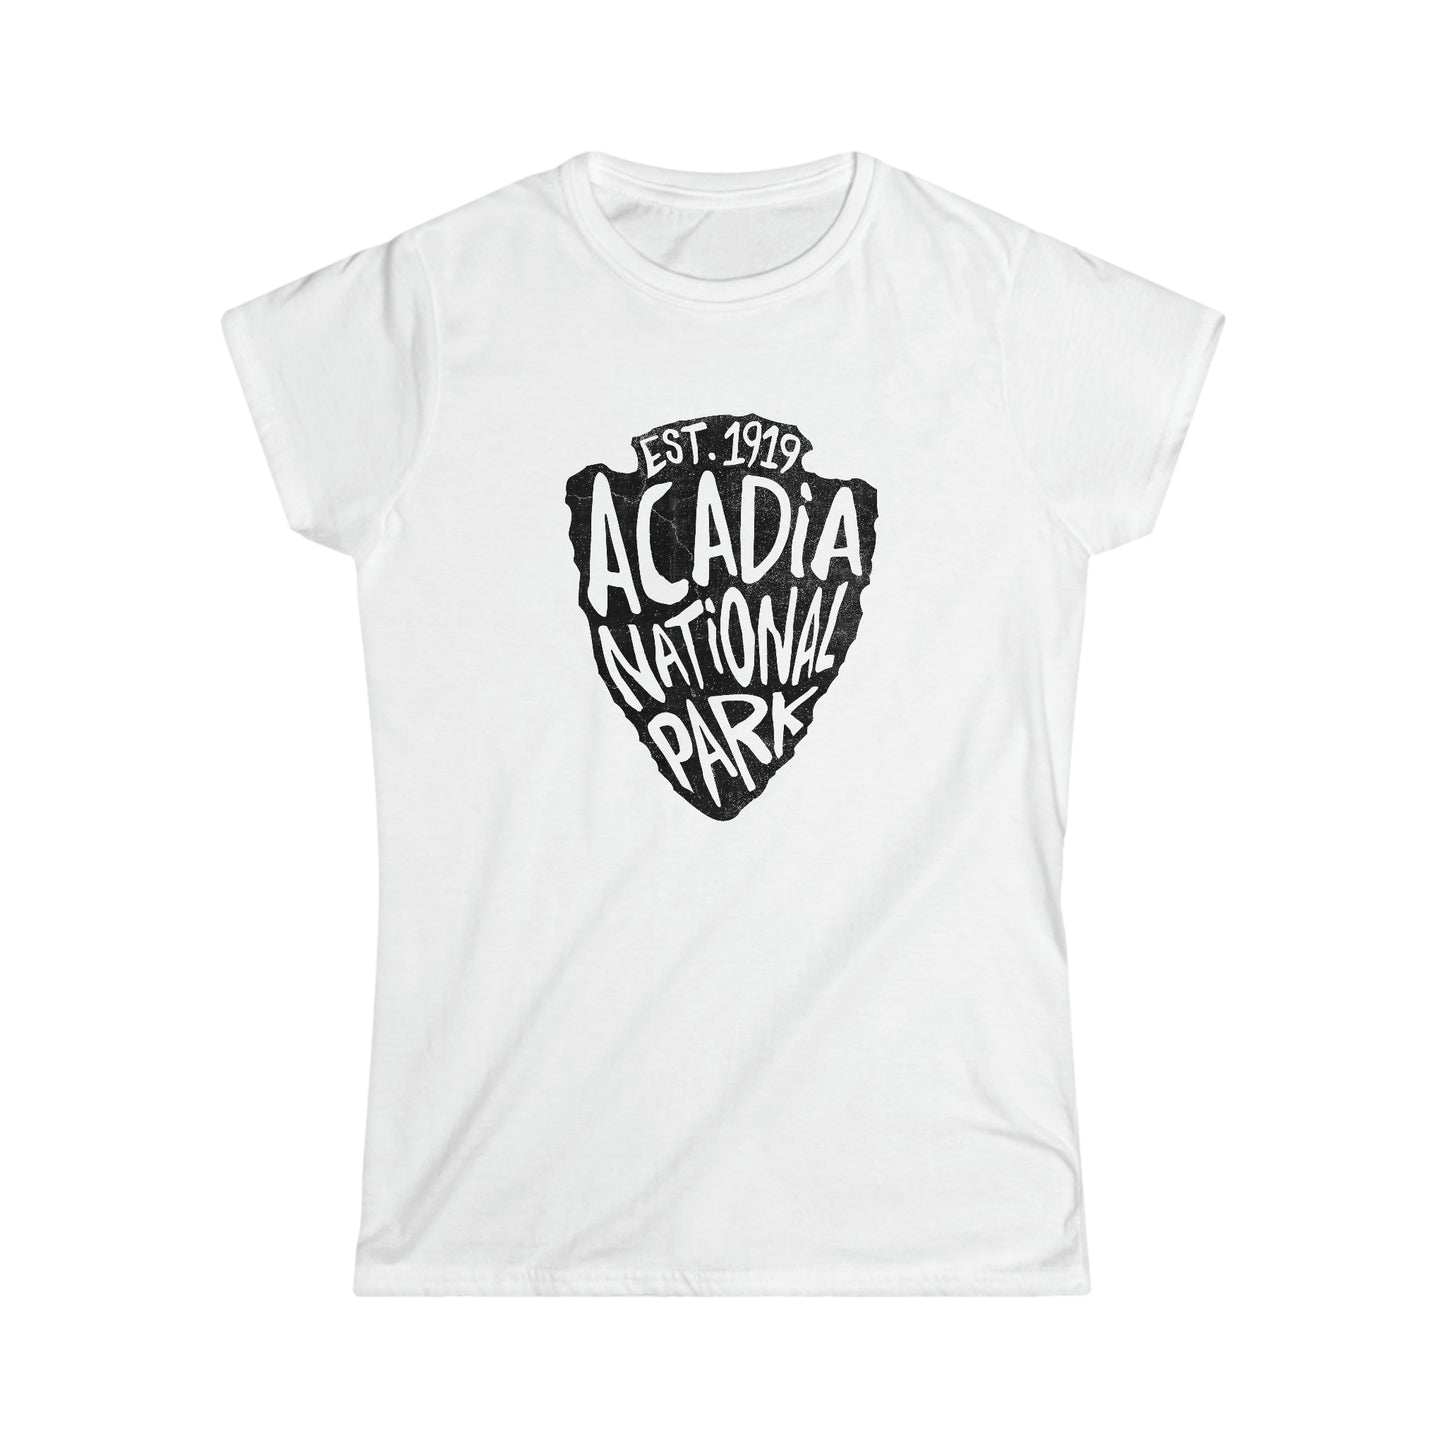 Acadia National Park Women's T-Shirt - Arrowhead Design